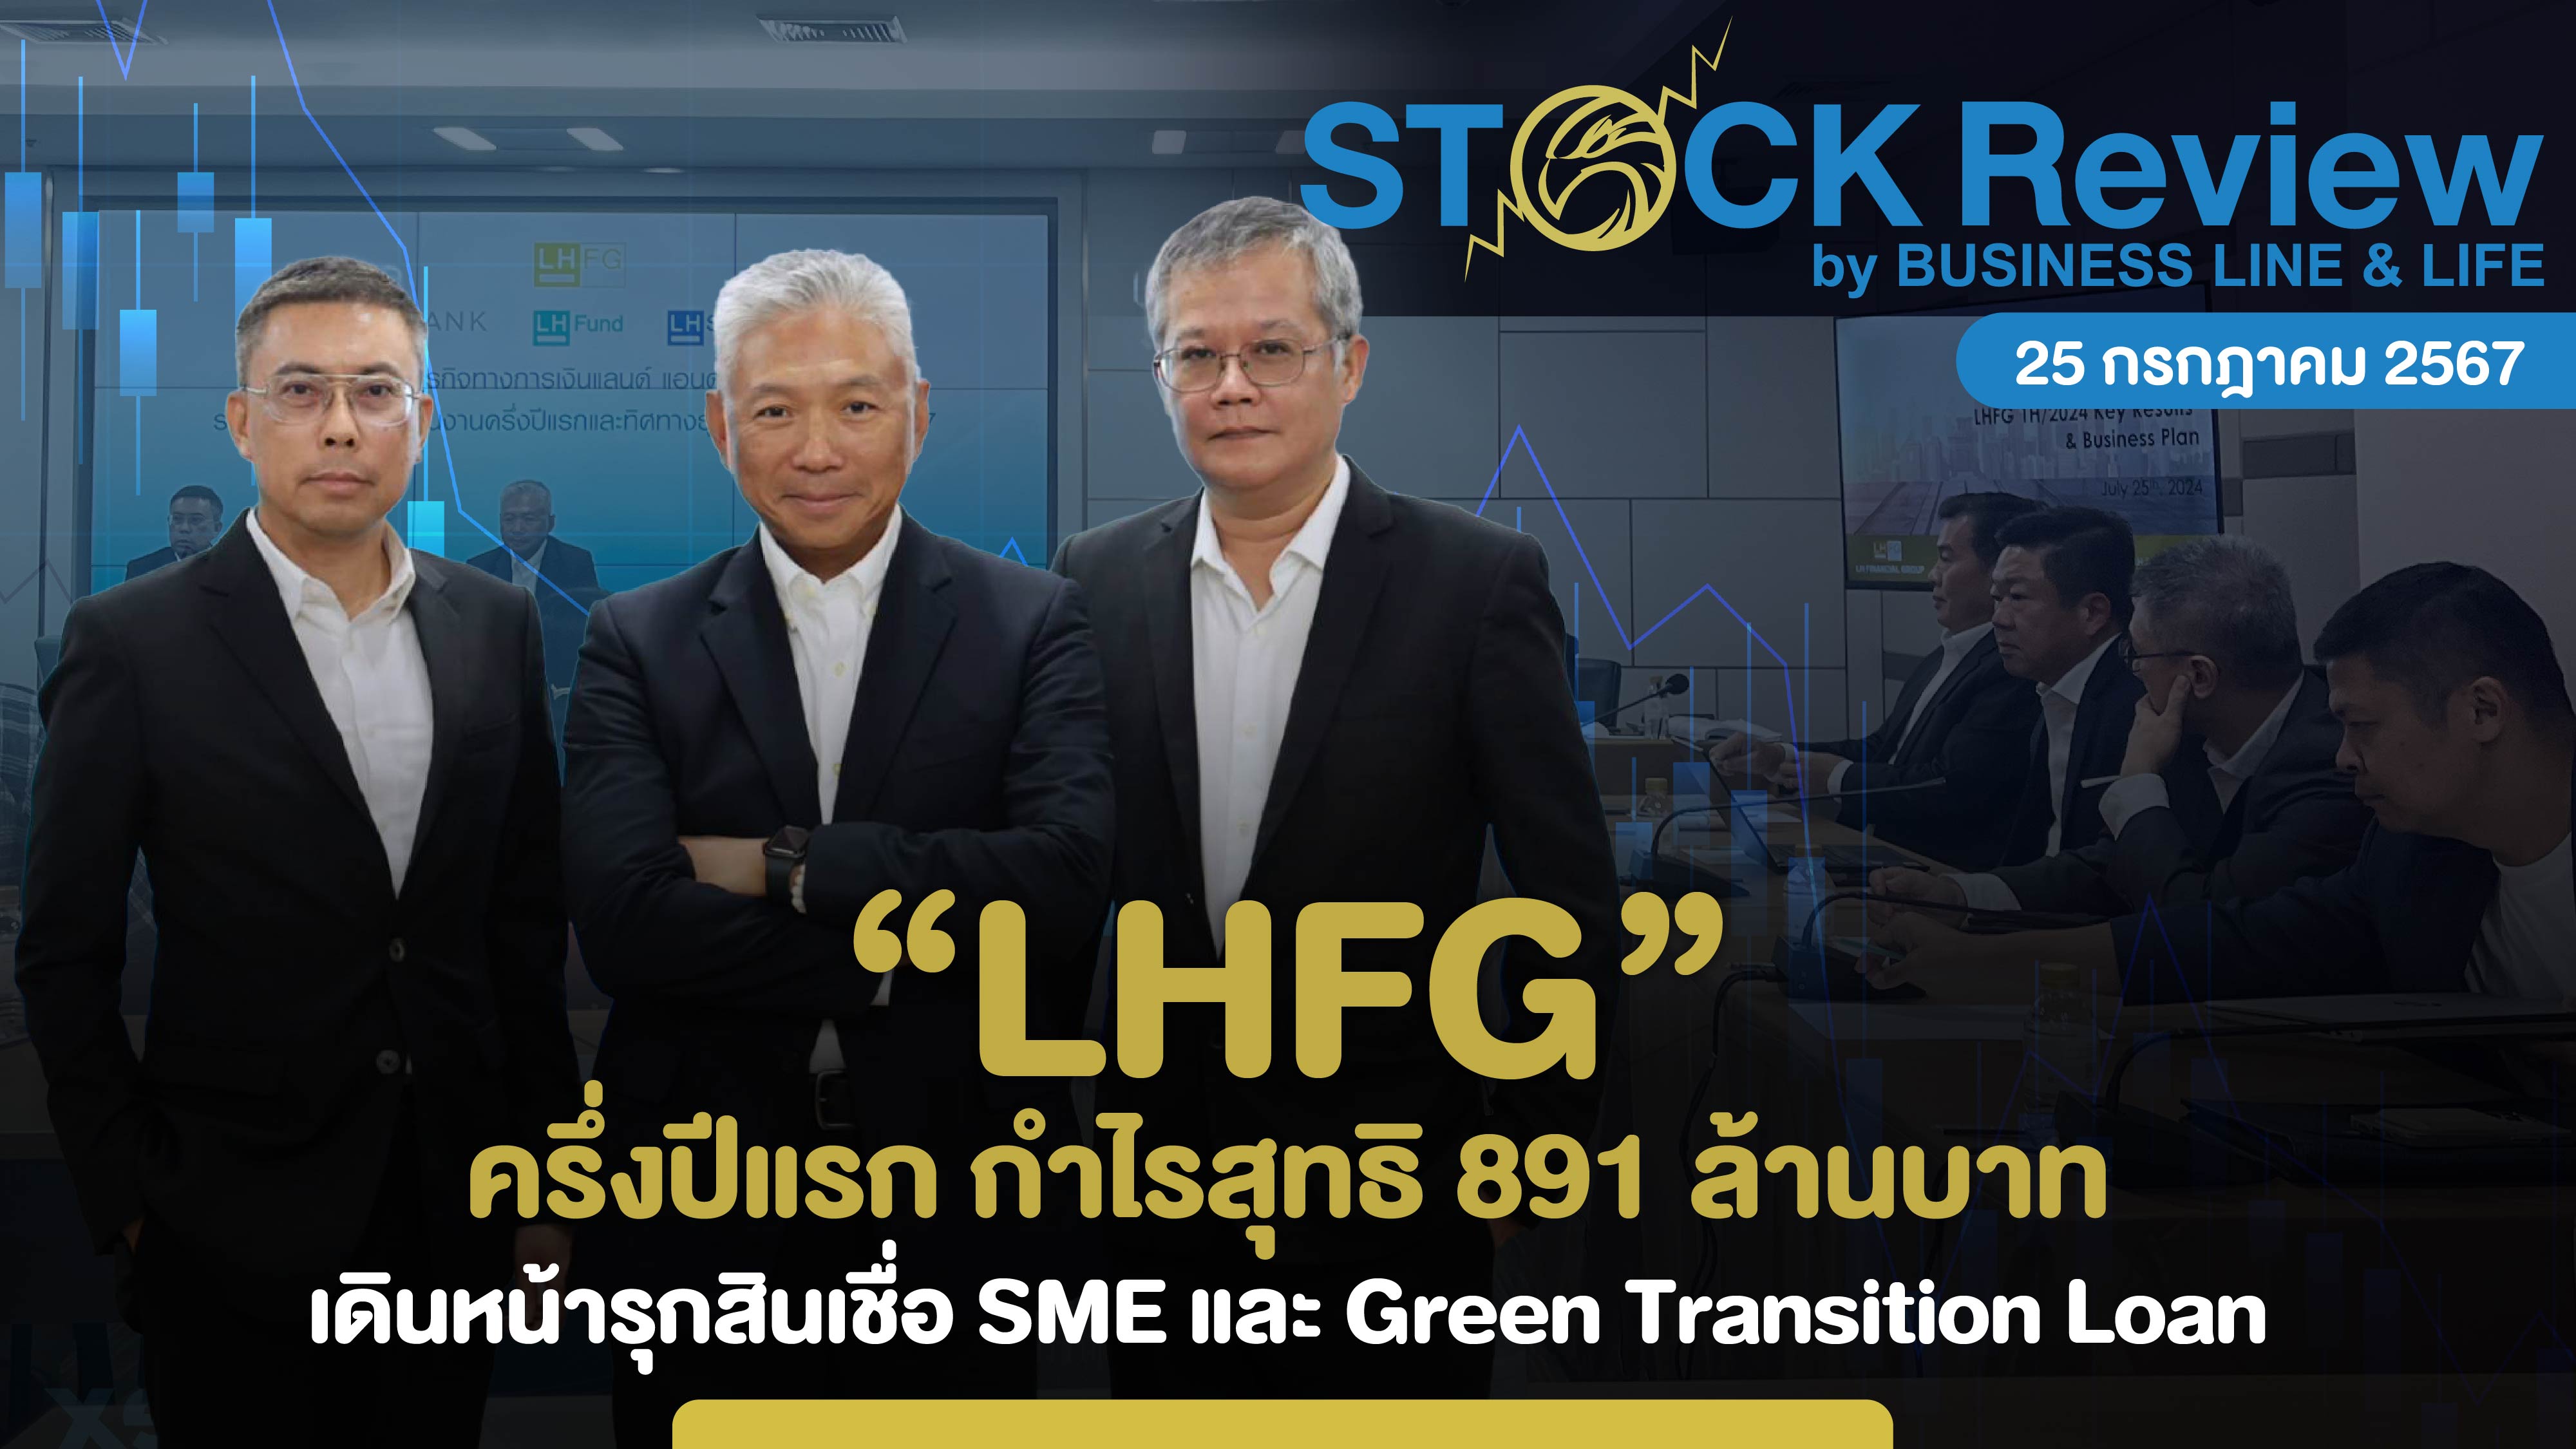 LHFG ครึ่งปีแรก กำไรสุทธิ 891 ล้านบาท เดินหน้ารุกสินเชื่อ SME และ Green Transition Loan